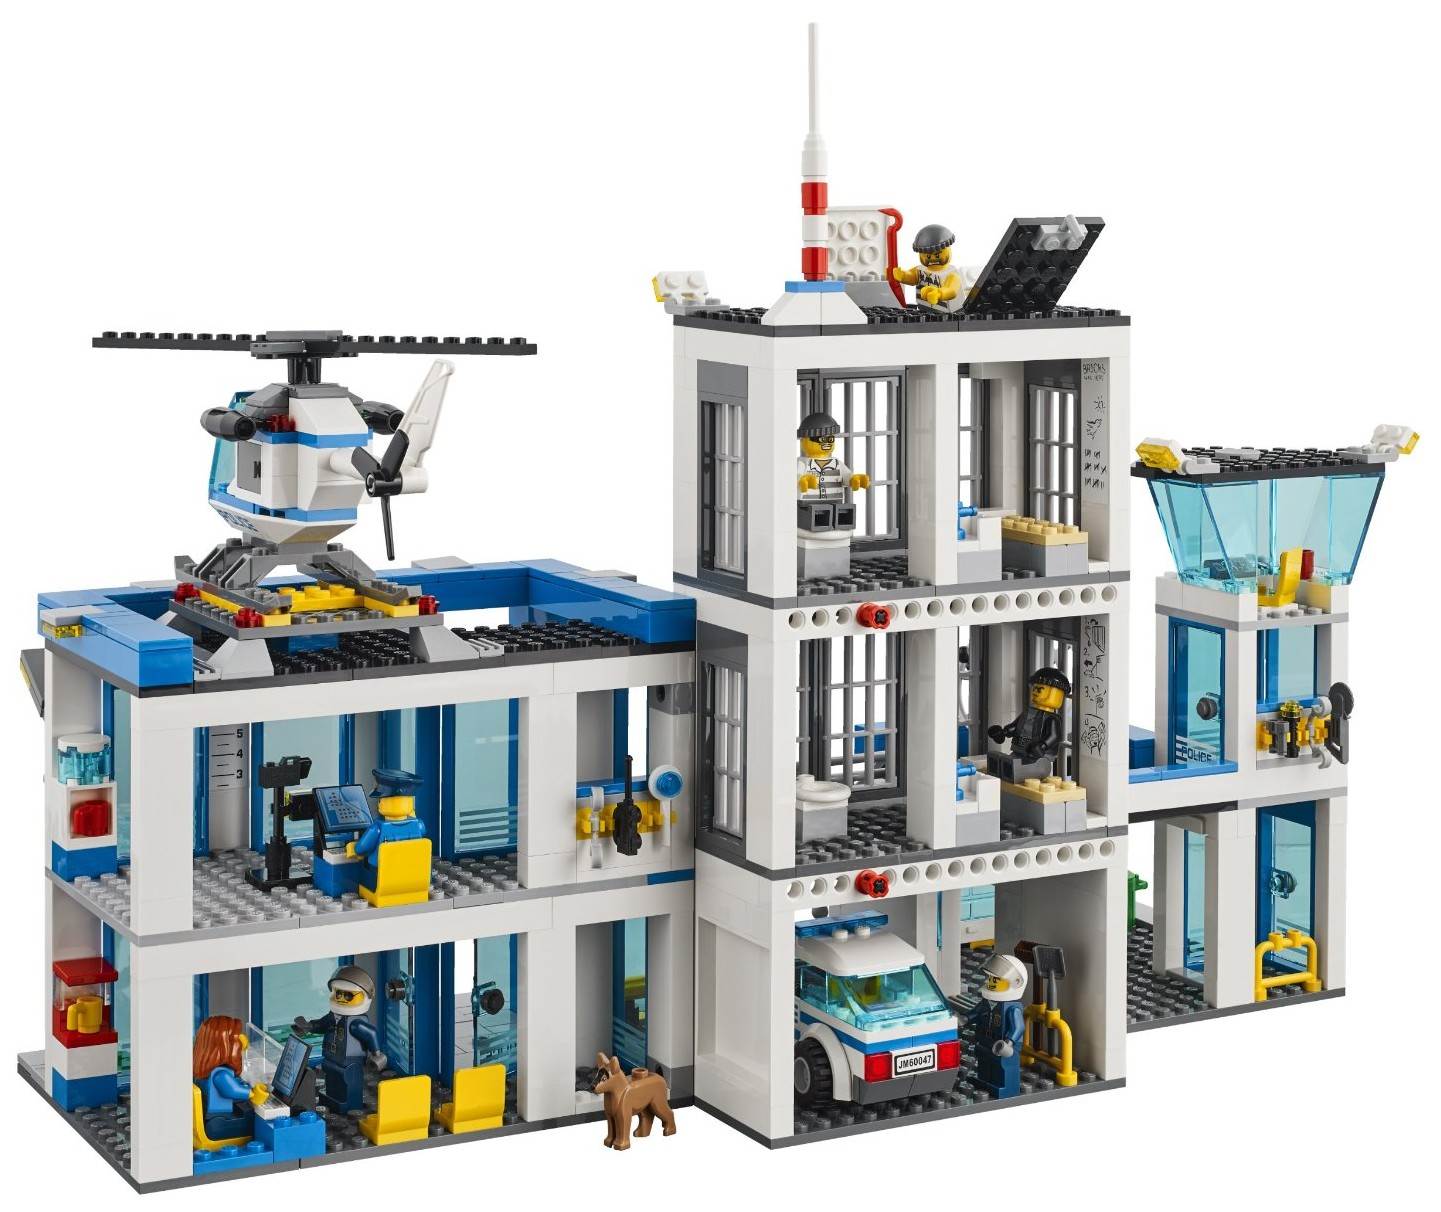 LEGO City 60047 - Police Station - image 4 of 7